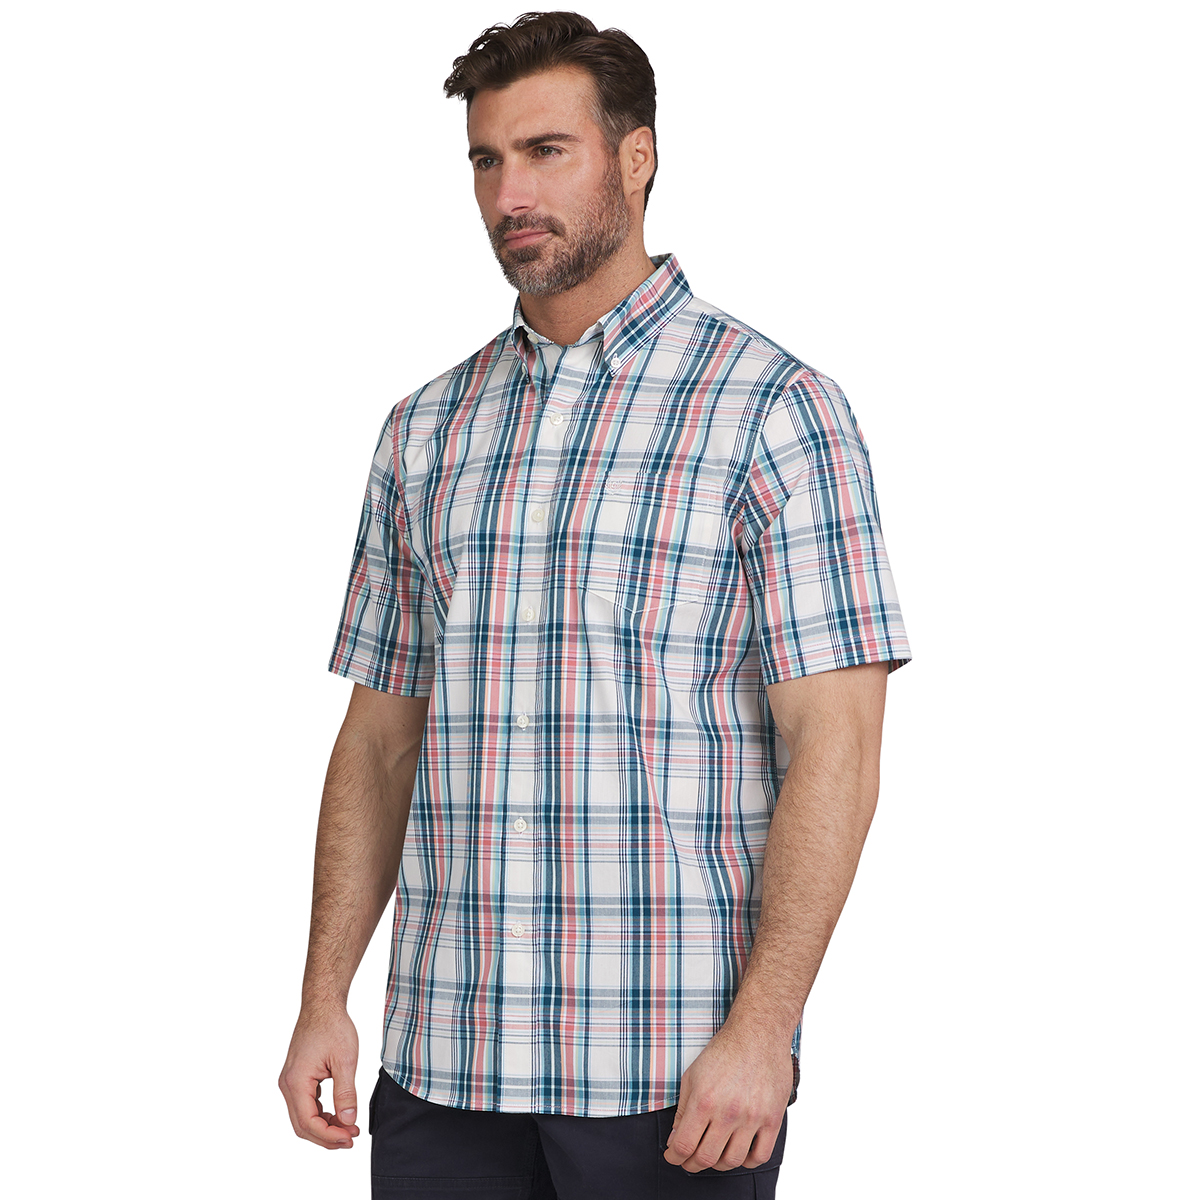 Chaps Men's Easy Care Woven Short-Sleeve Shirt